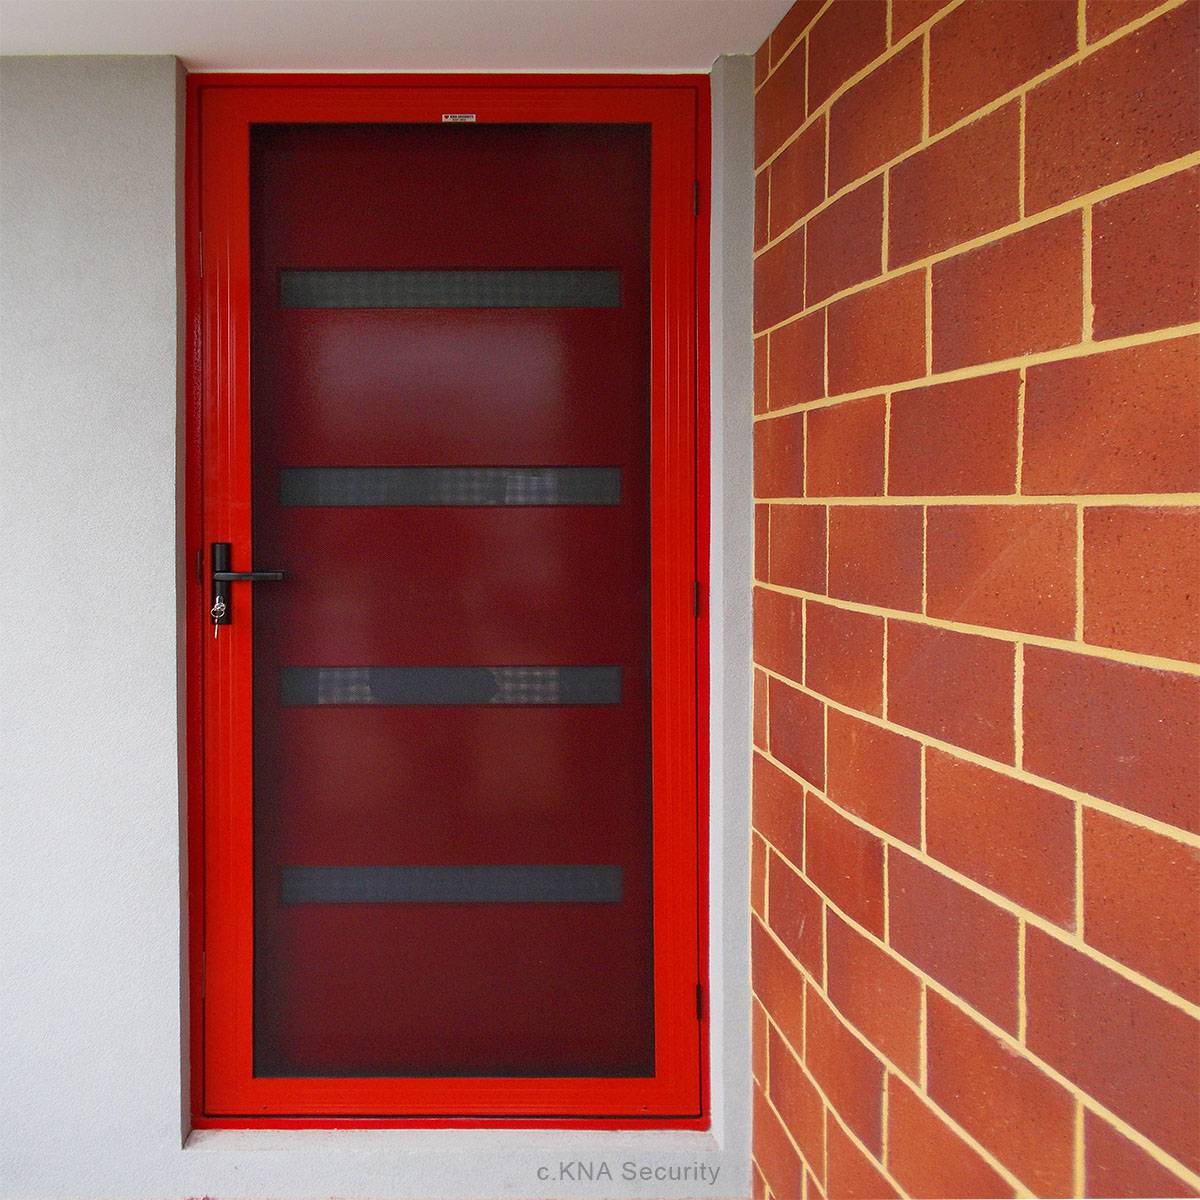 View Photo: Red stainless steel security door